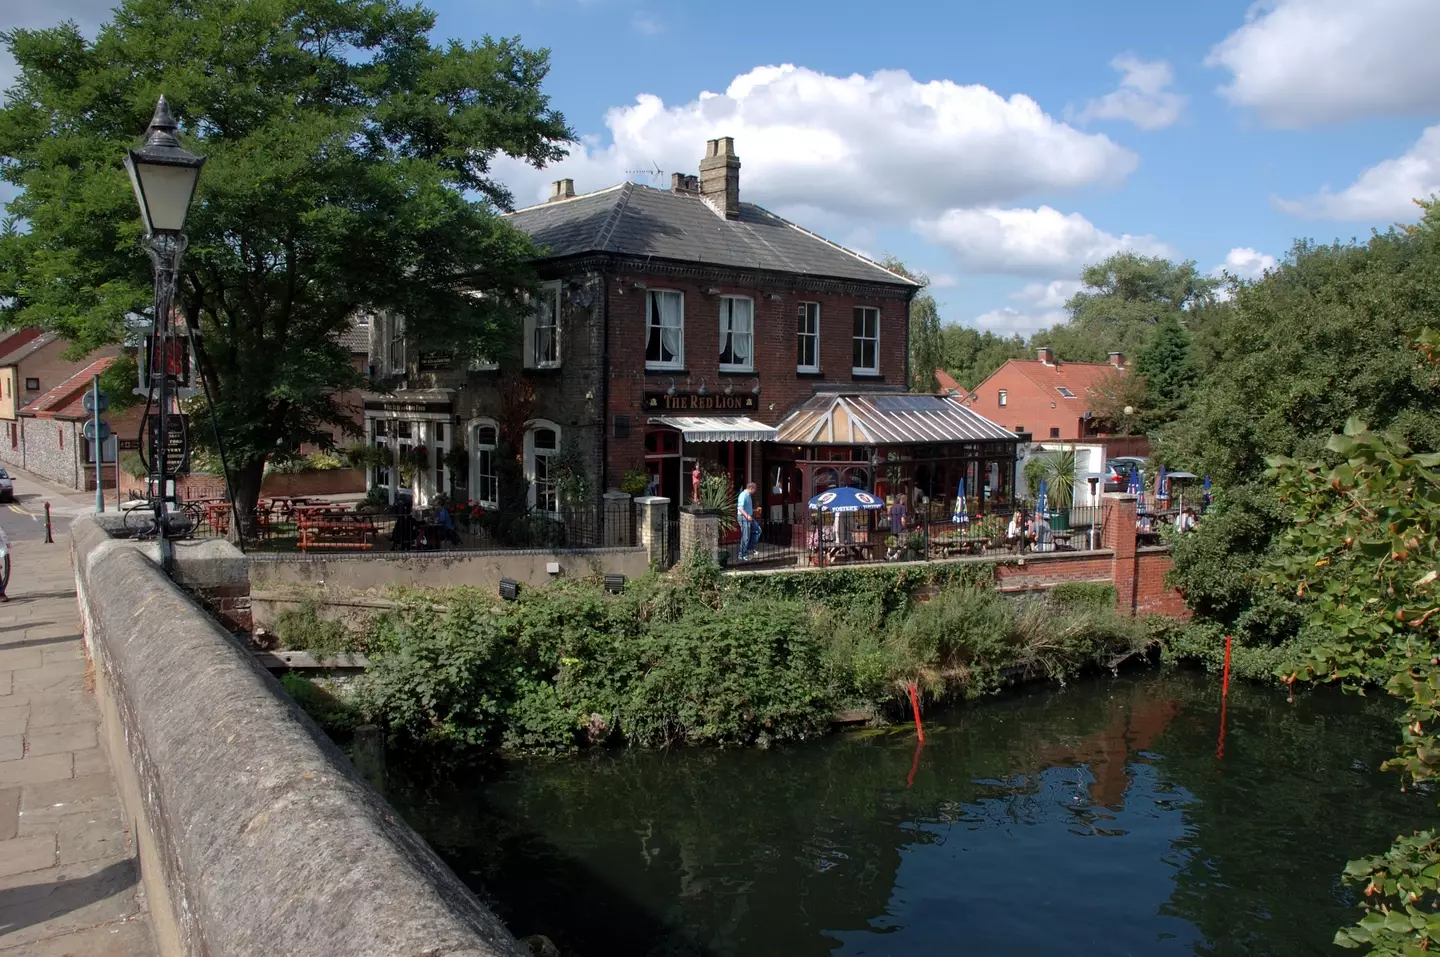 Norwich is the beer garden capital of the UK.